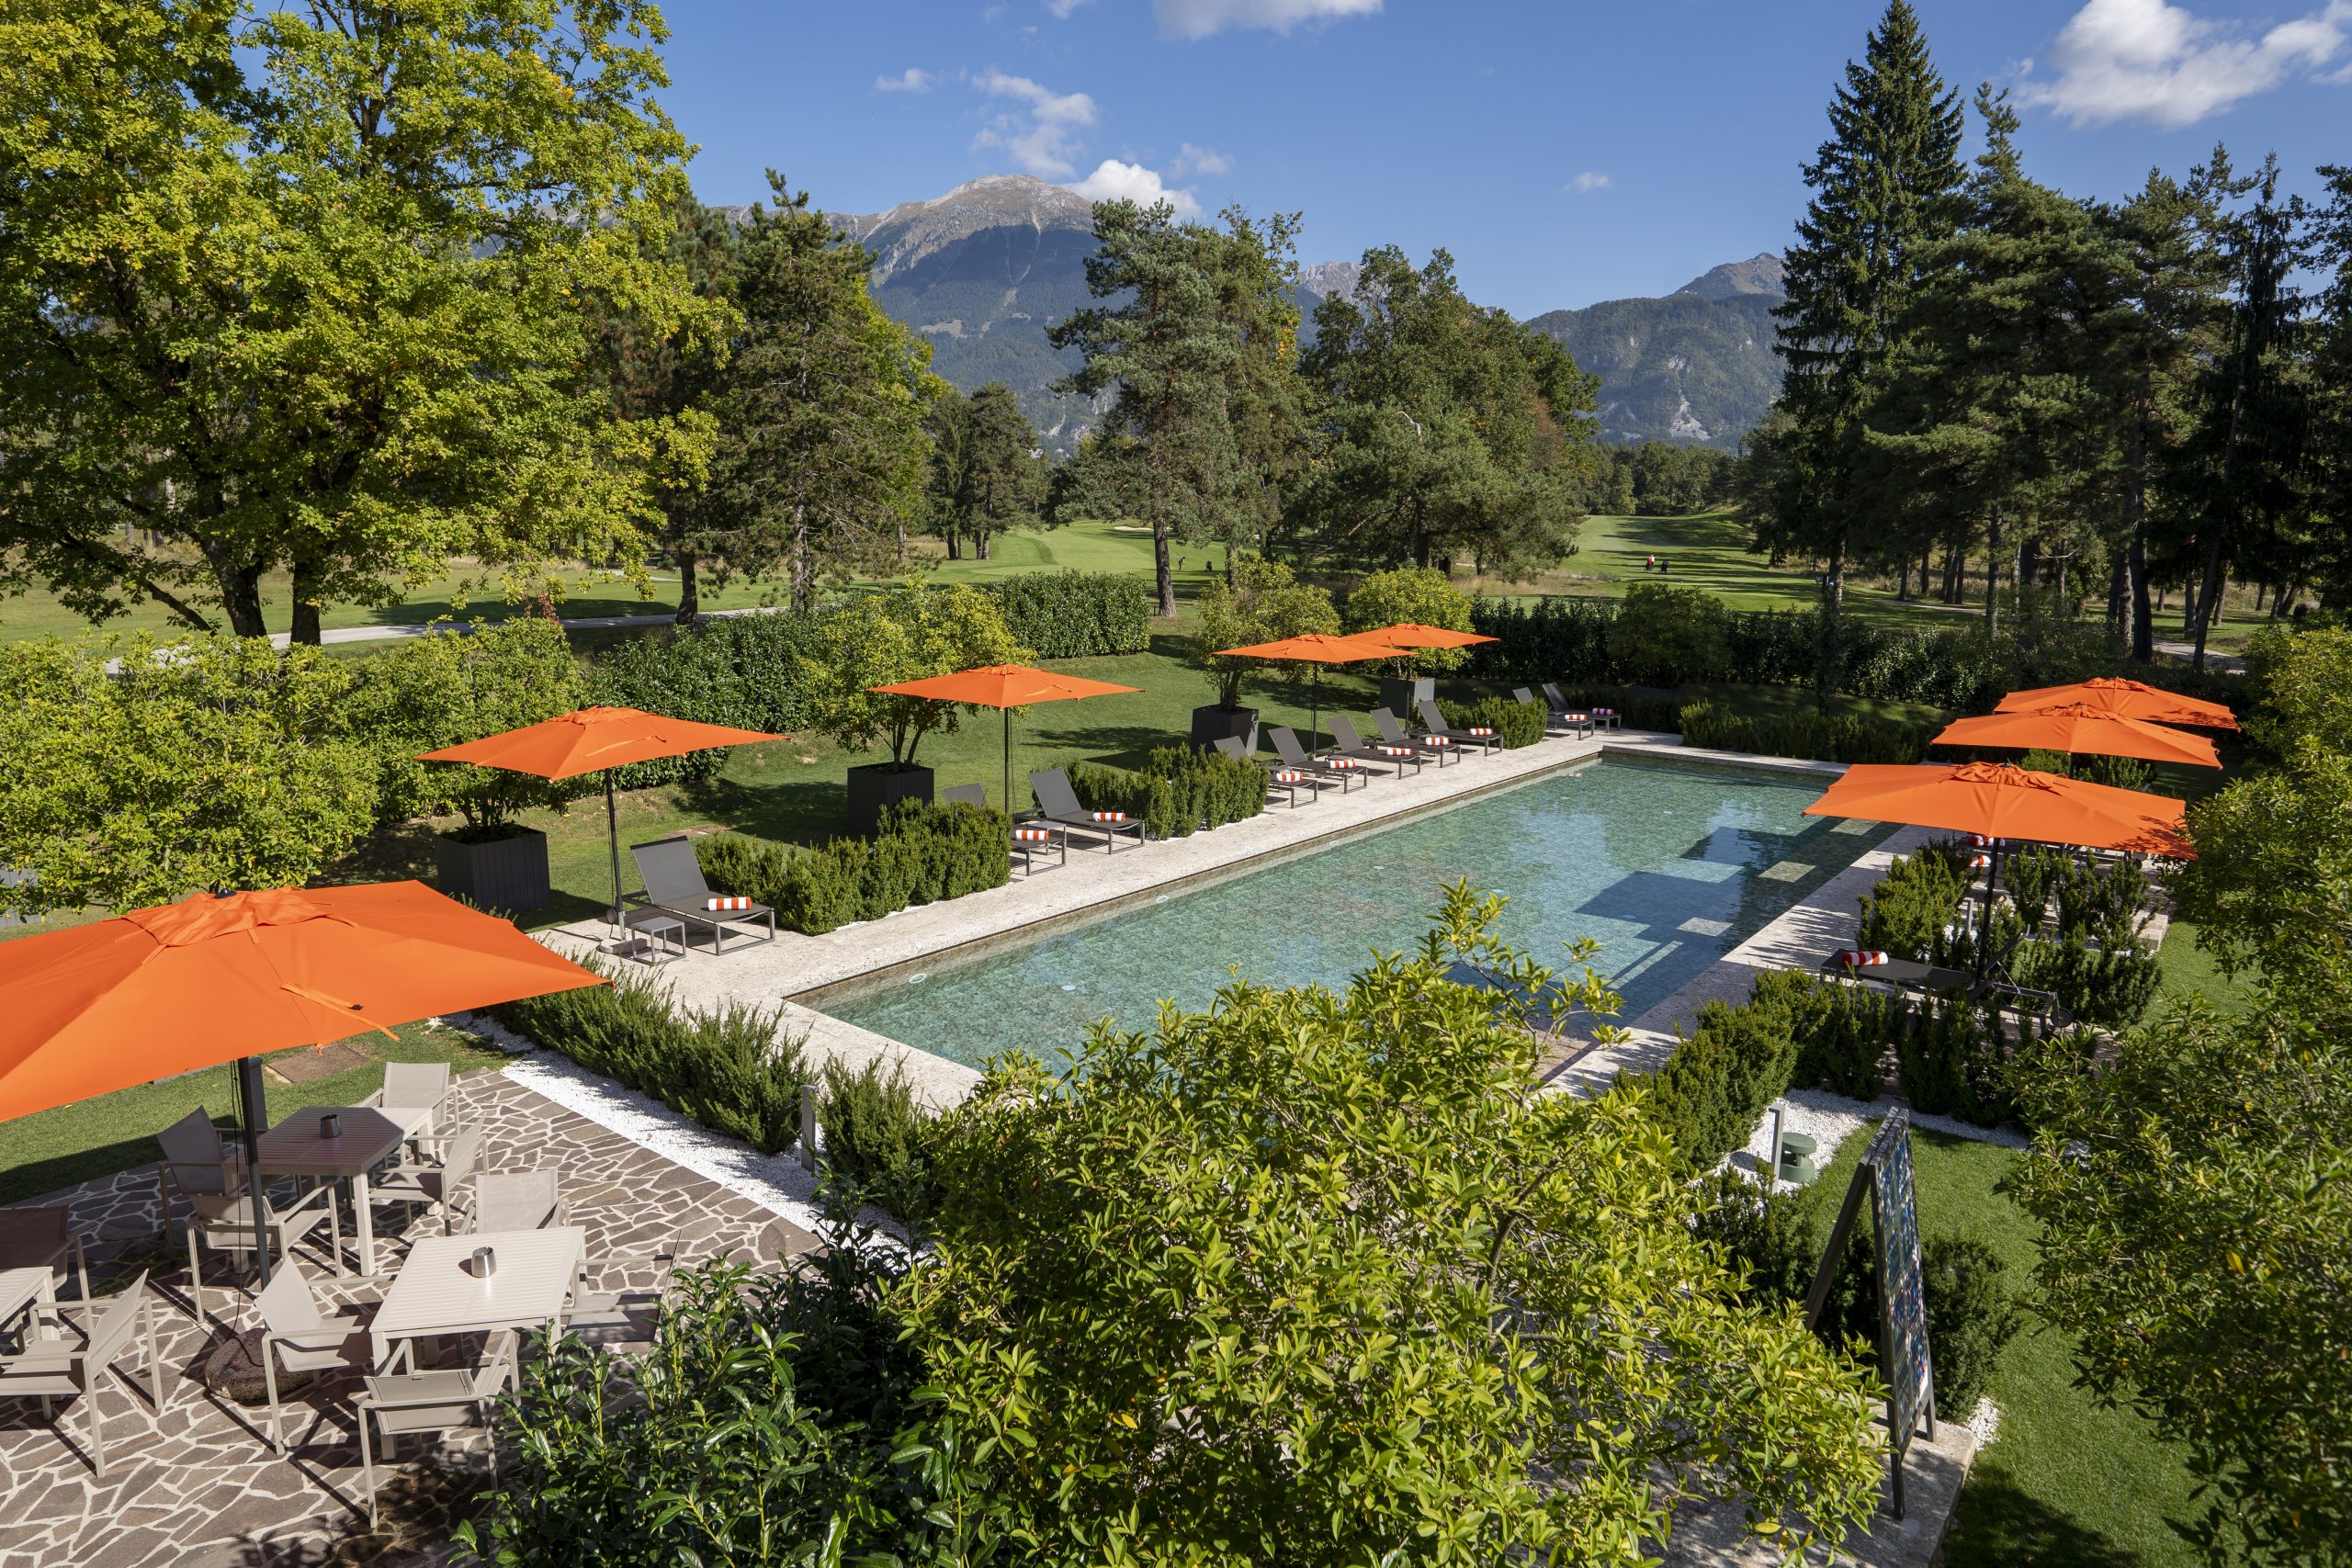 502 - Swimming pool - Lake`s House, Royal Bled